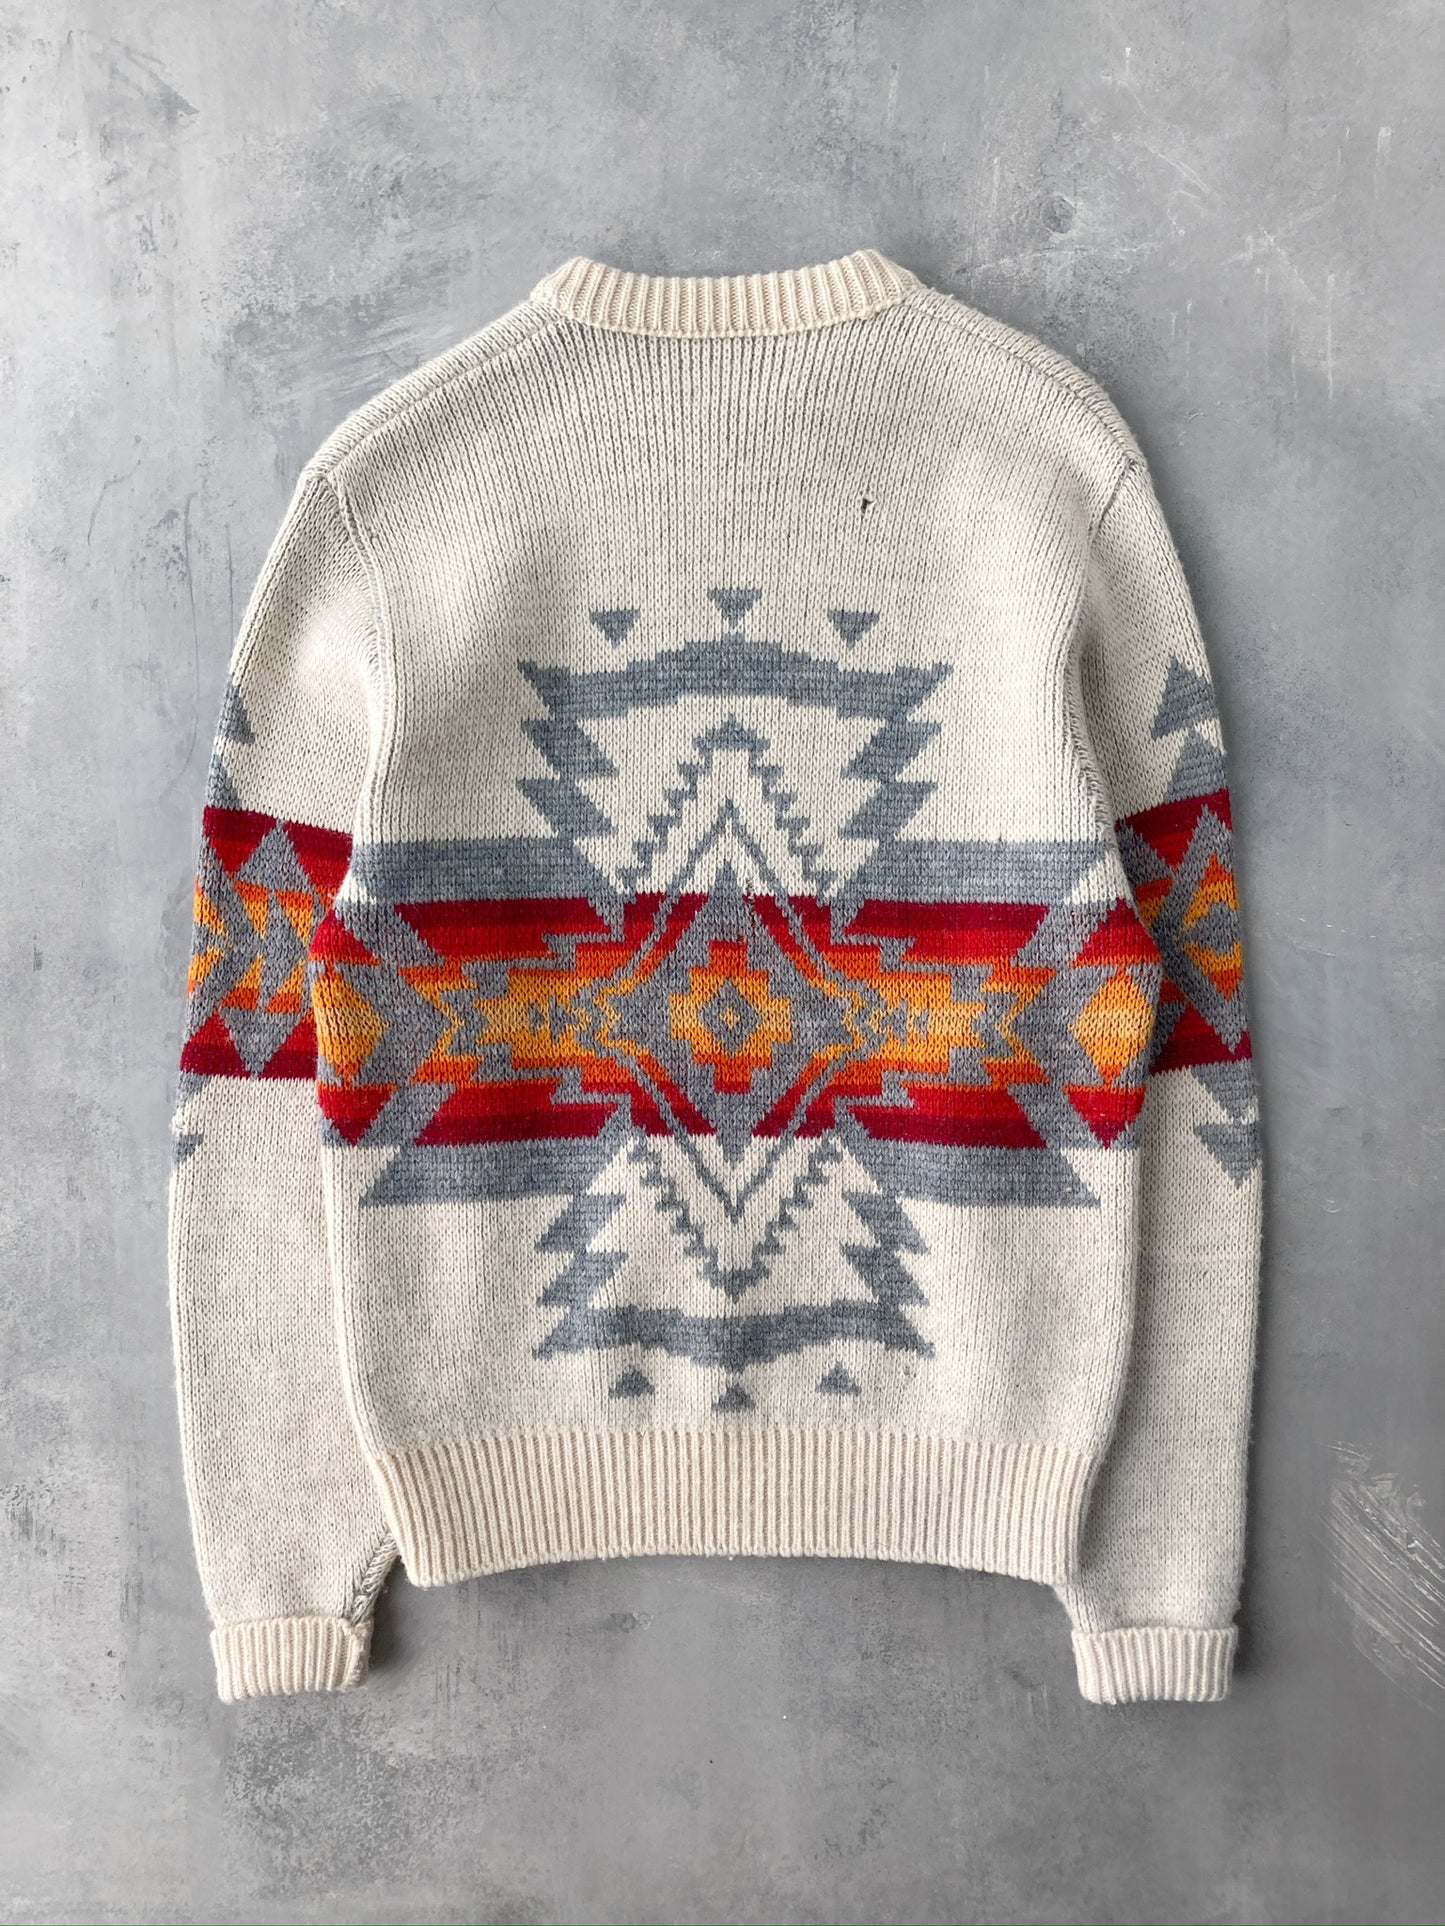 Pendleton Sweater 70's - Small